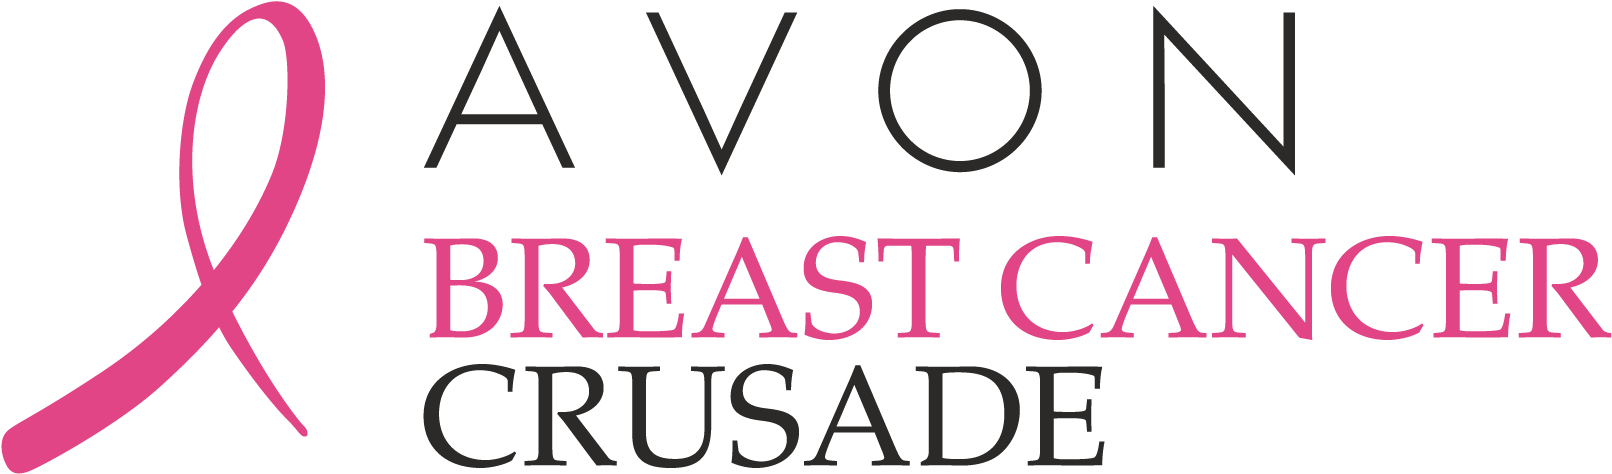 avon breast cancer crusade